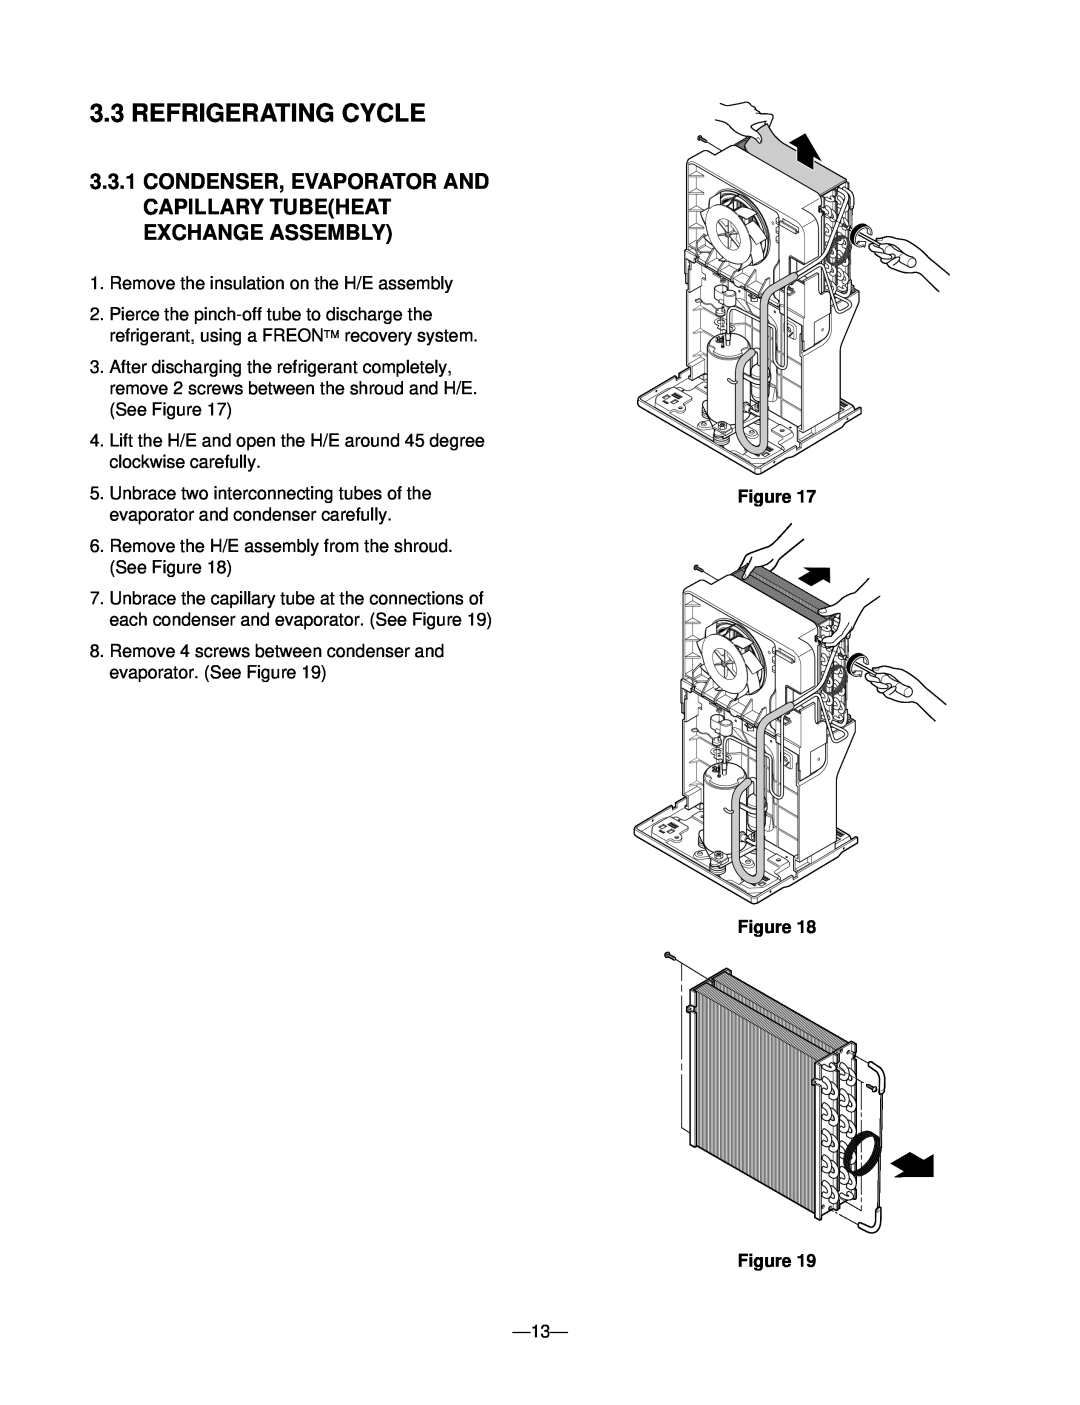 Goldstar DHA3012DL, DHA4012DL, DHA5012DL, DH5010B, DH3010B service manual Refrigerating Cycle, Figure Figure Figure 